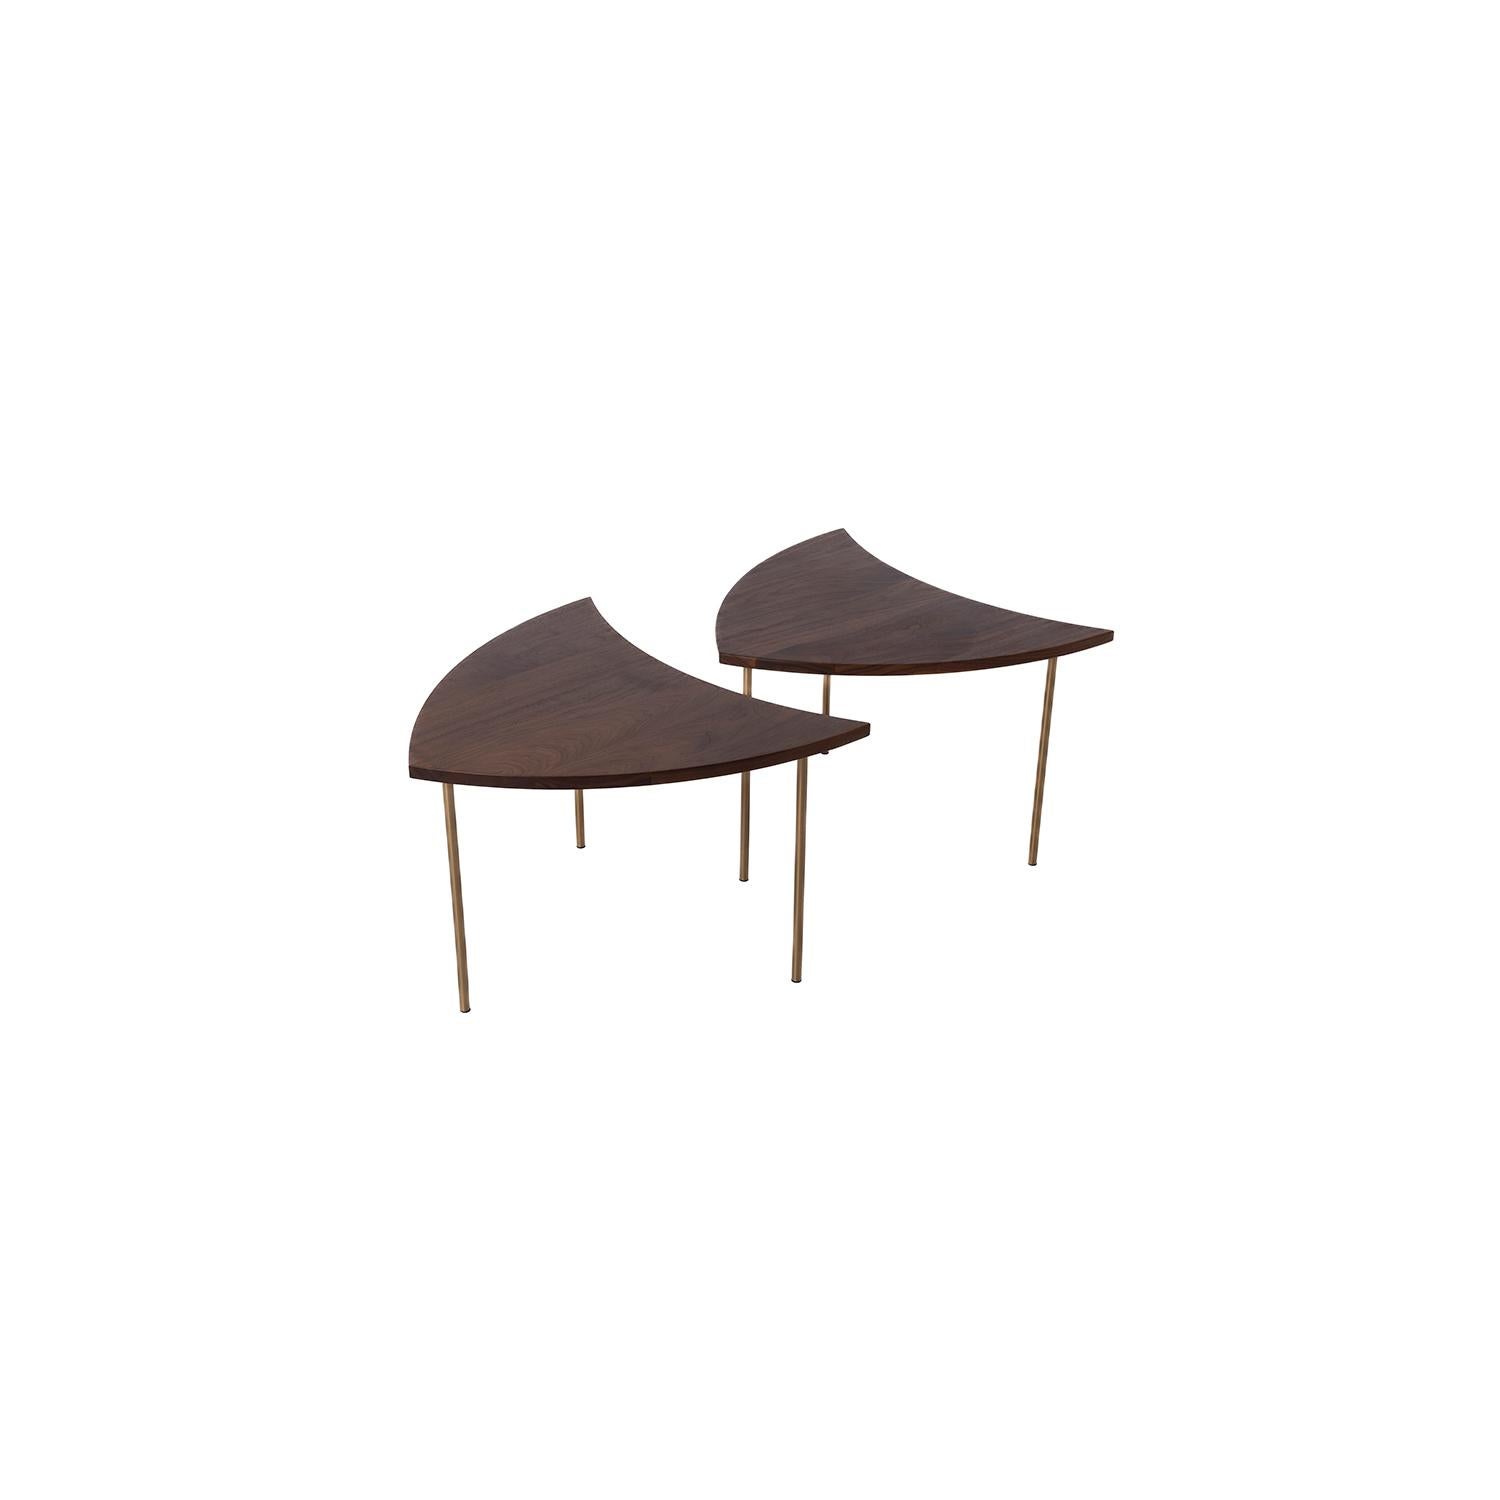 20th Century Scandinaving Modern Hvidt and Molgaard Pinwheel Occasional Table For Sale